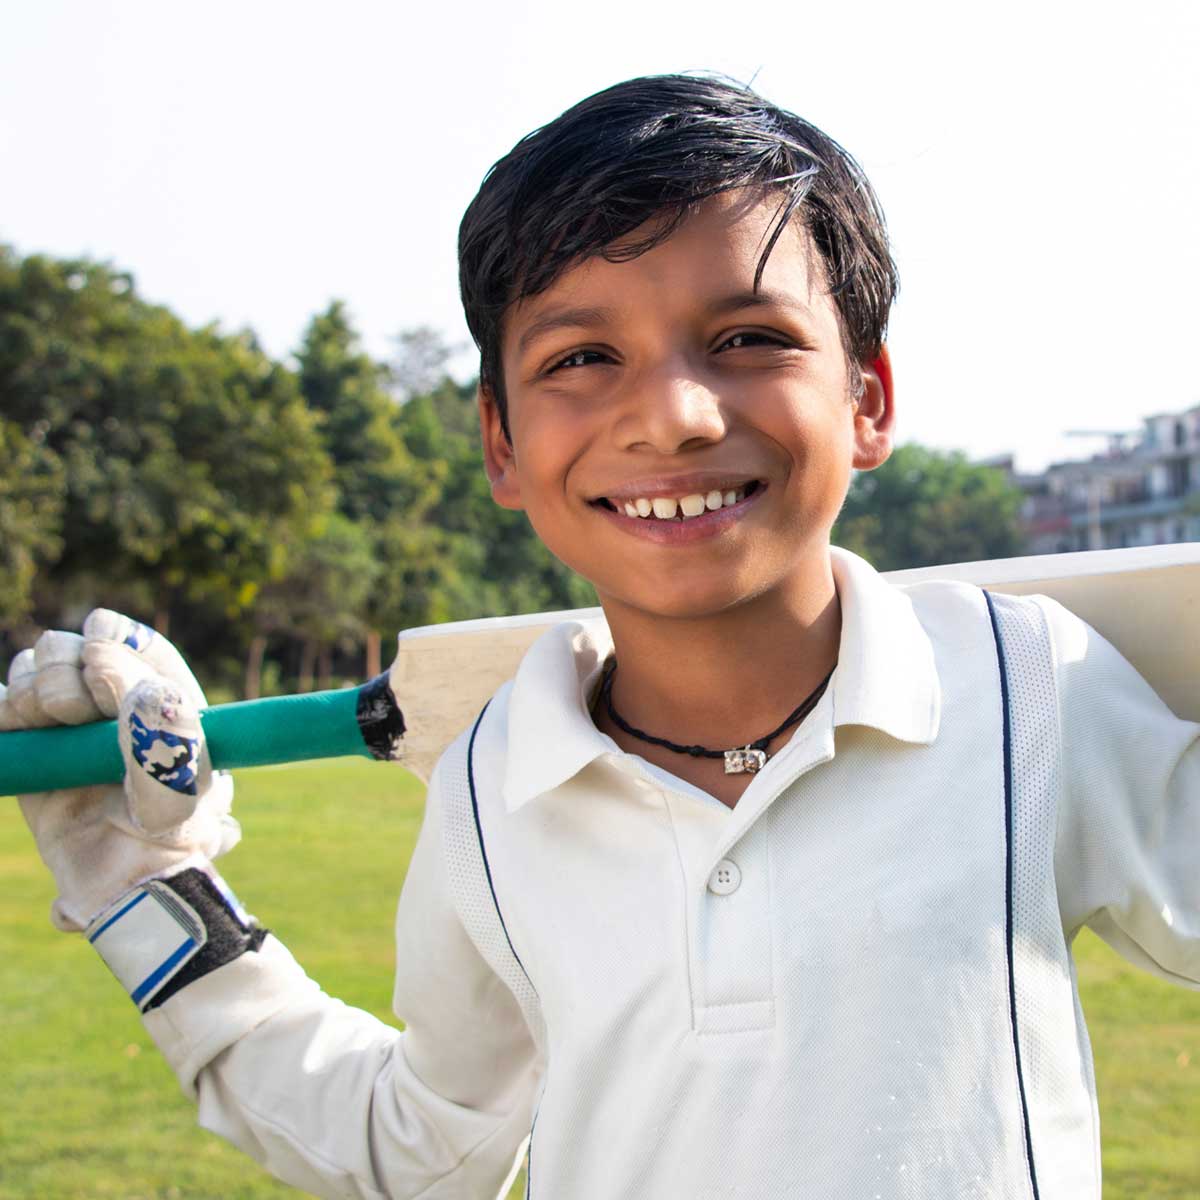 Junior Cricket Gloves Manufacturers in Shakhty